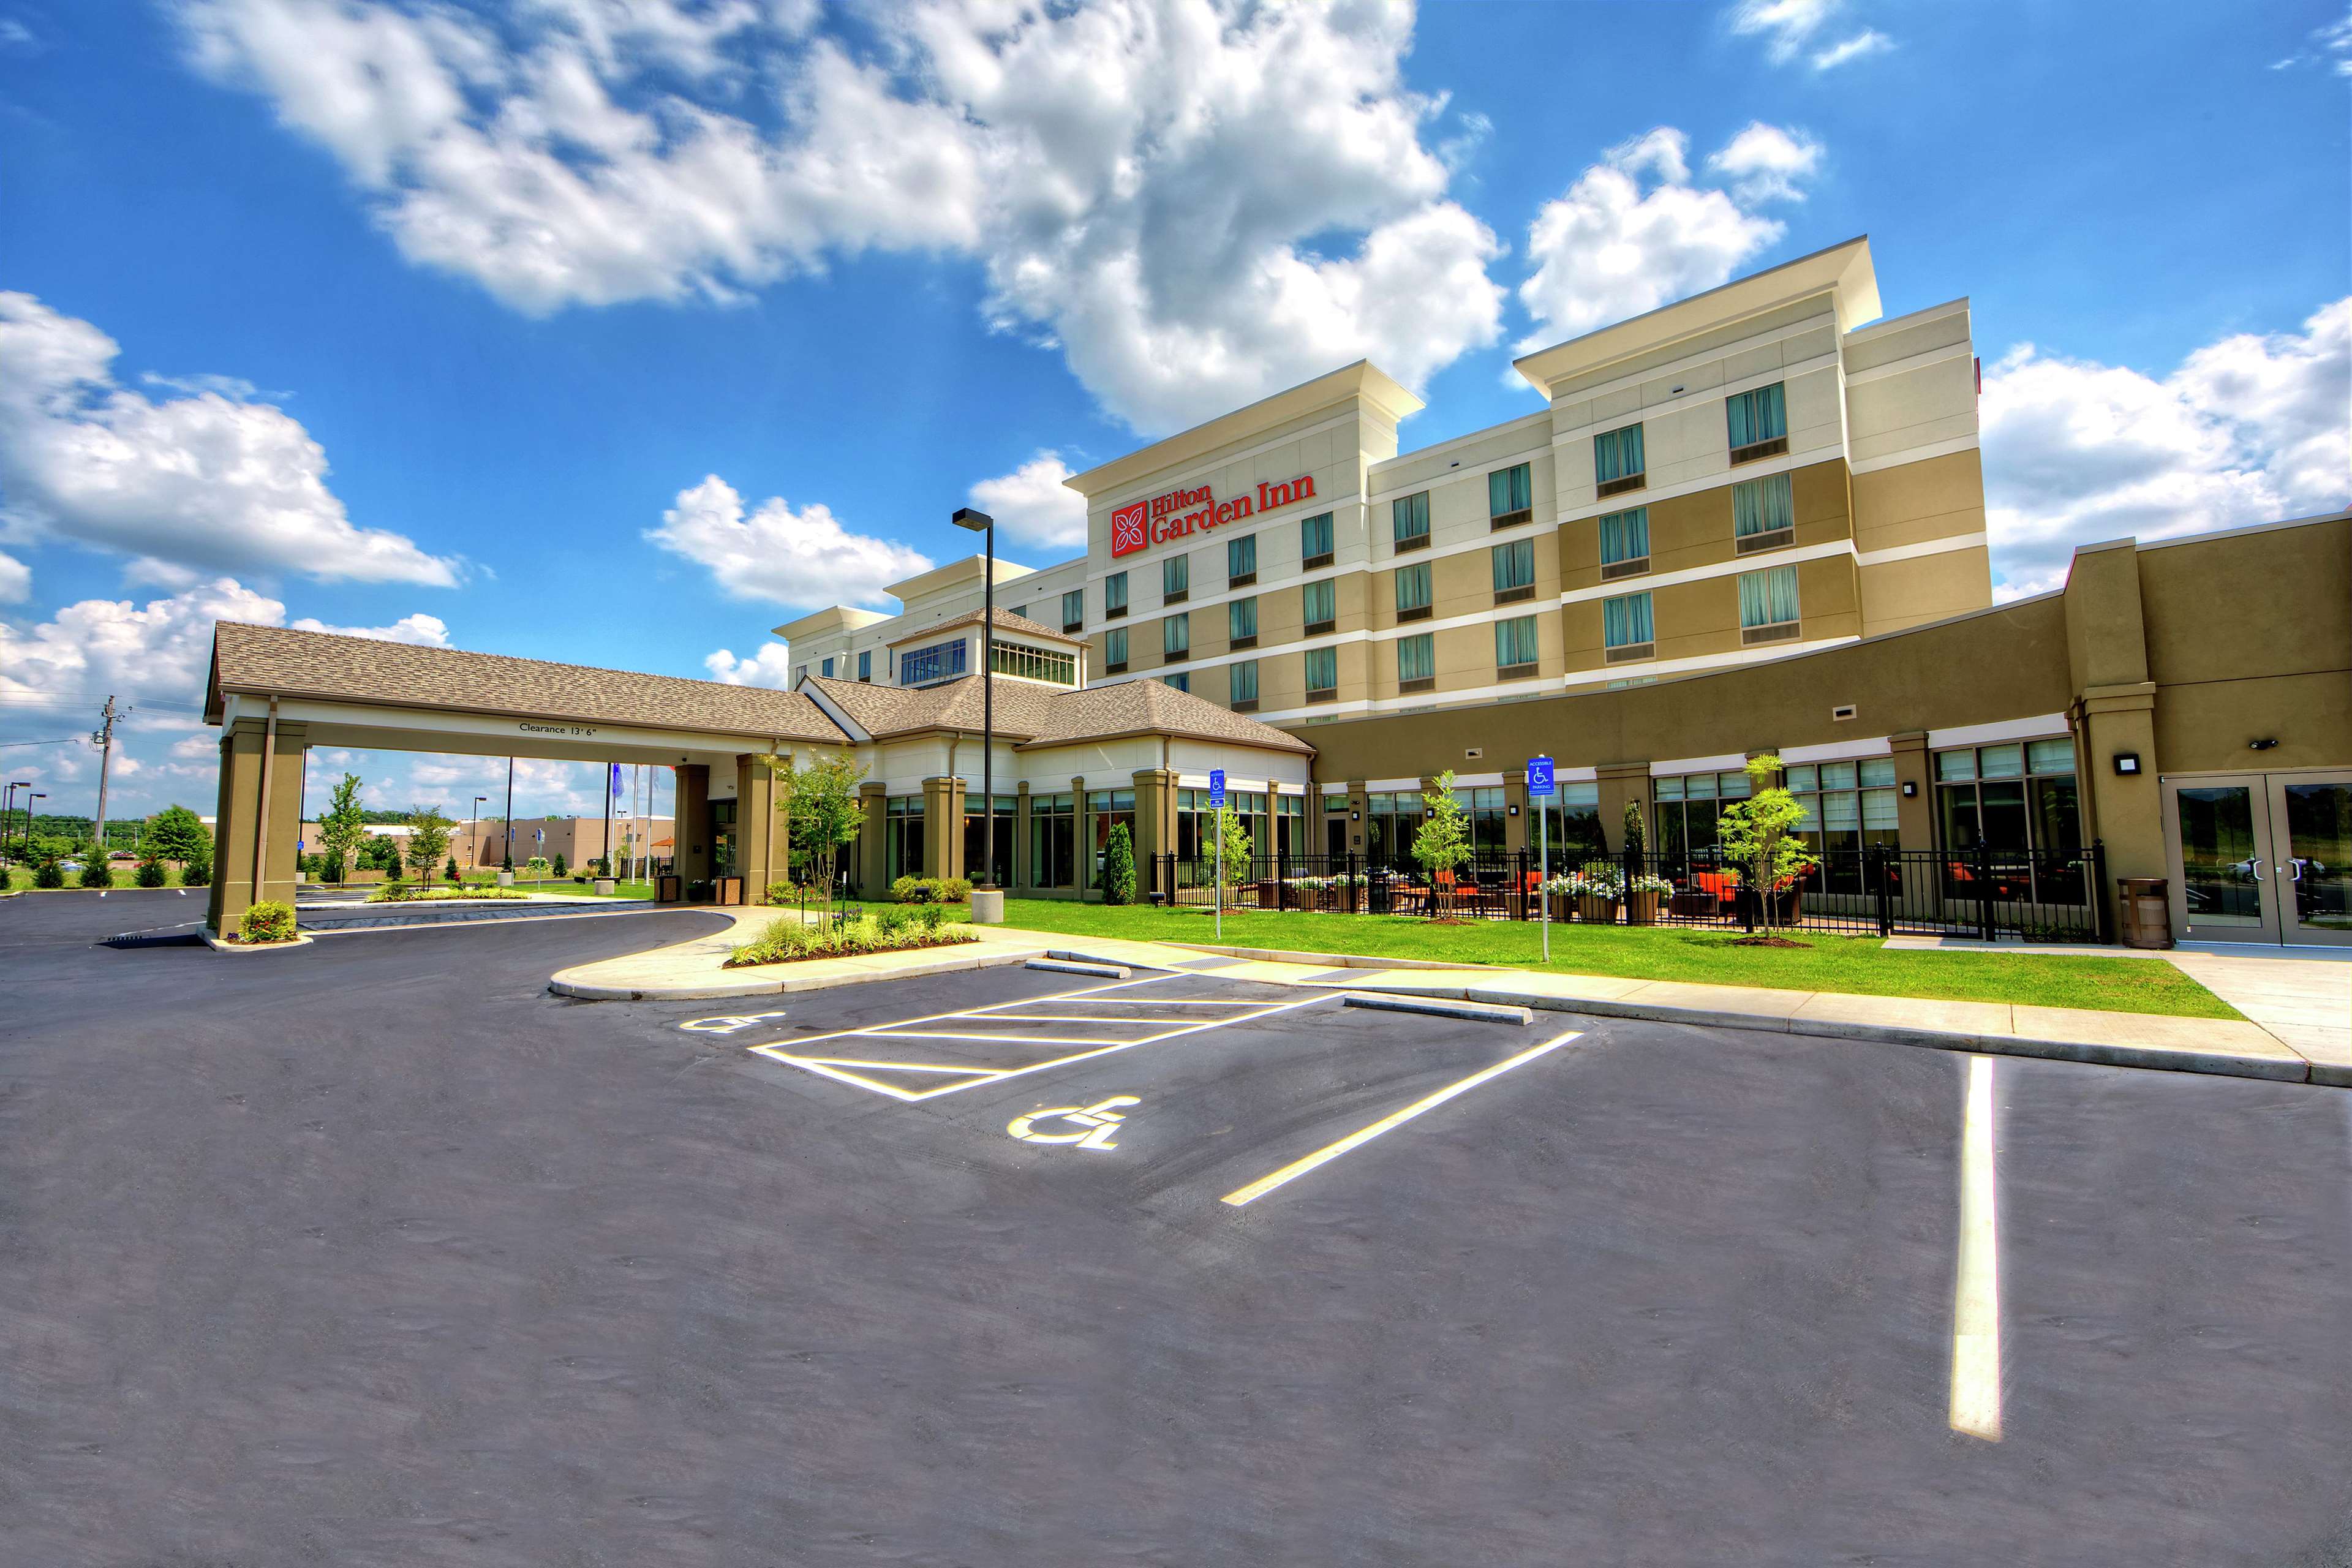 Hilton Garden Inn Memphiswolfchase Galleria 7955 Ikea Way Cordova Tn Hotels Motels - Mapquest